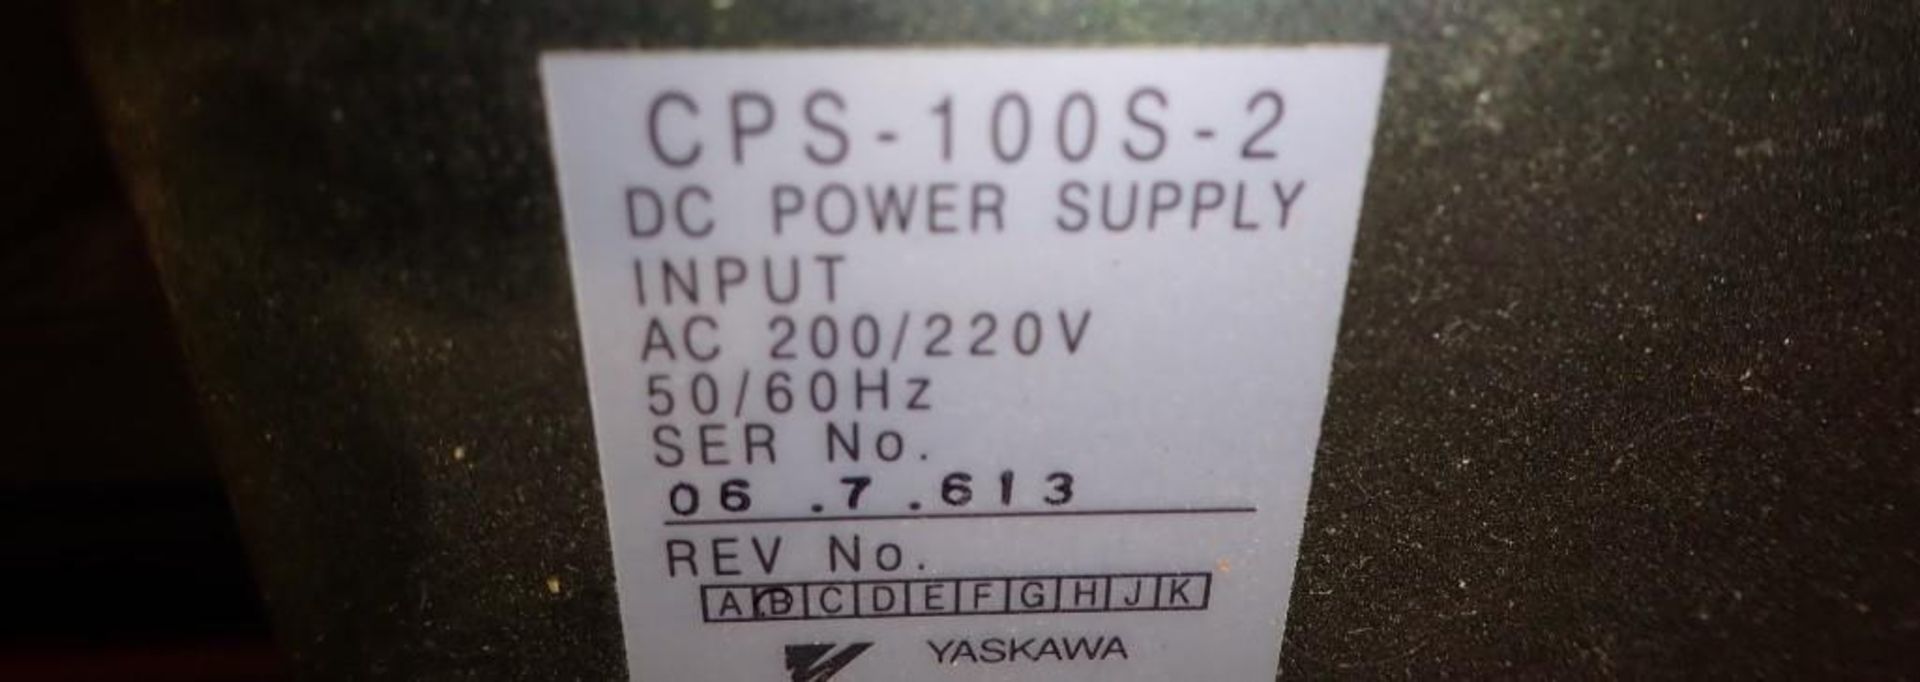 Yaskawa DC Power Supply, CPS-100S-2 - Image 3 of 3